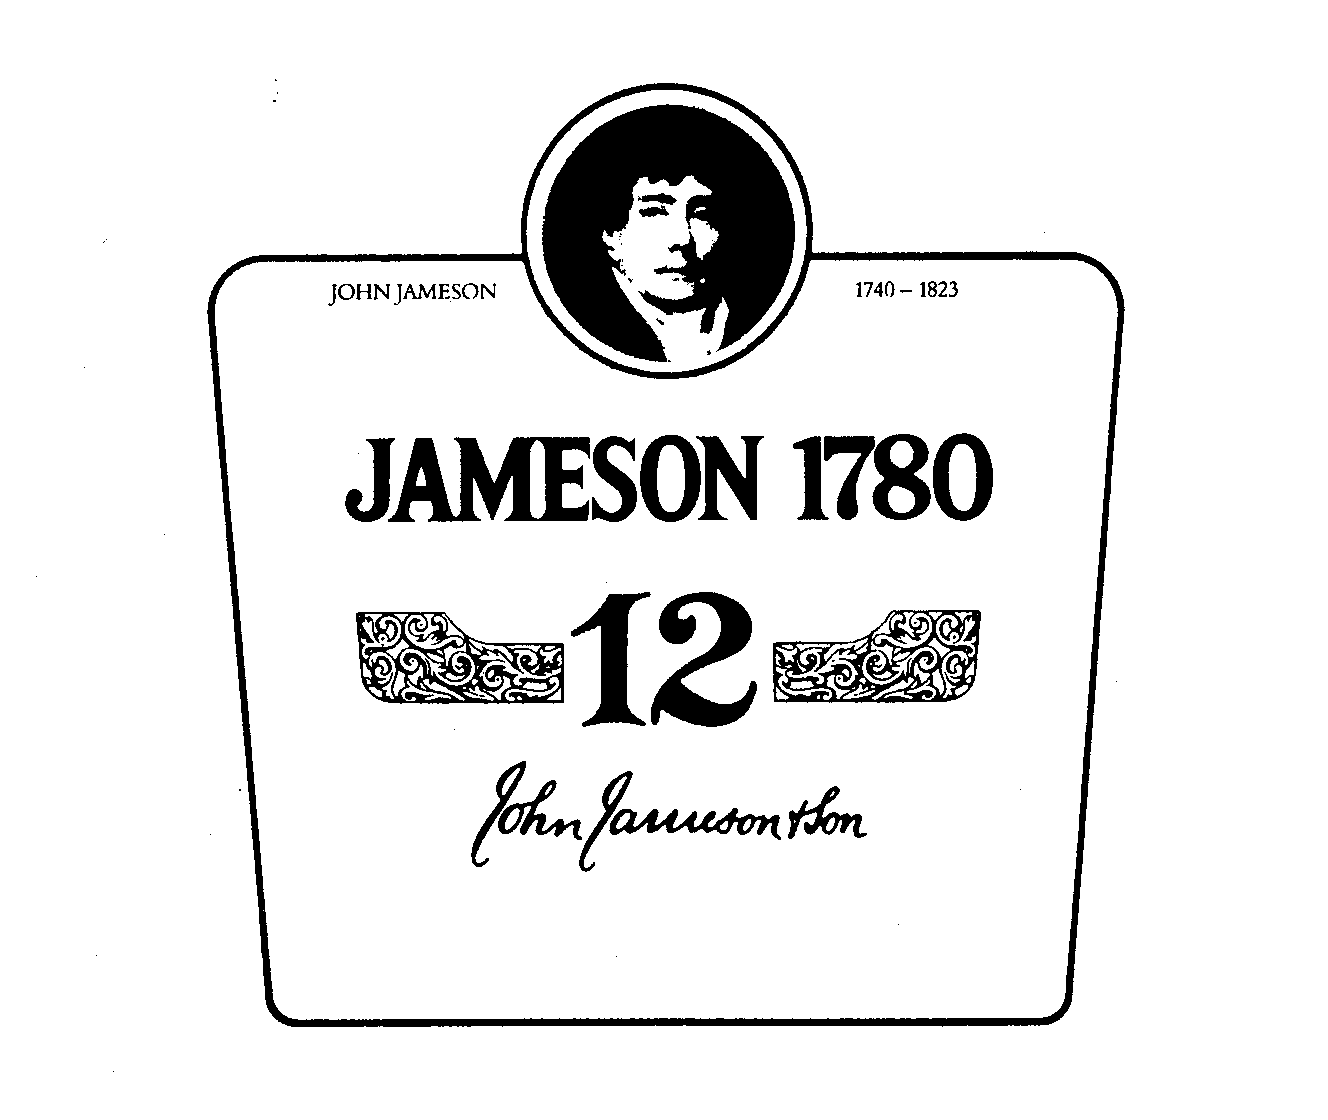  JAMESON 1780 JOHN JAMESON &amp; SON 12